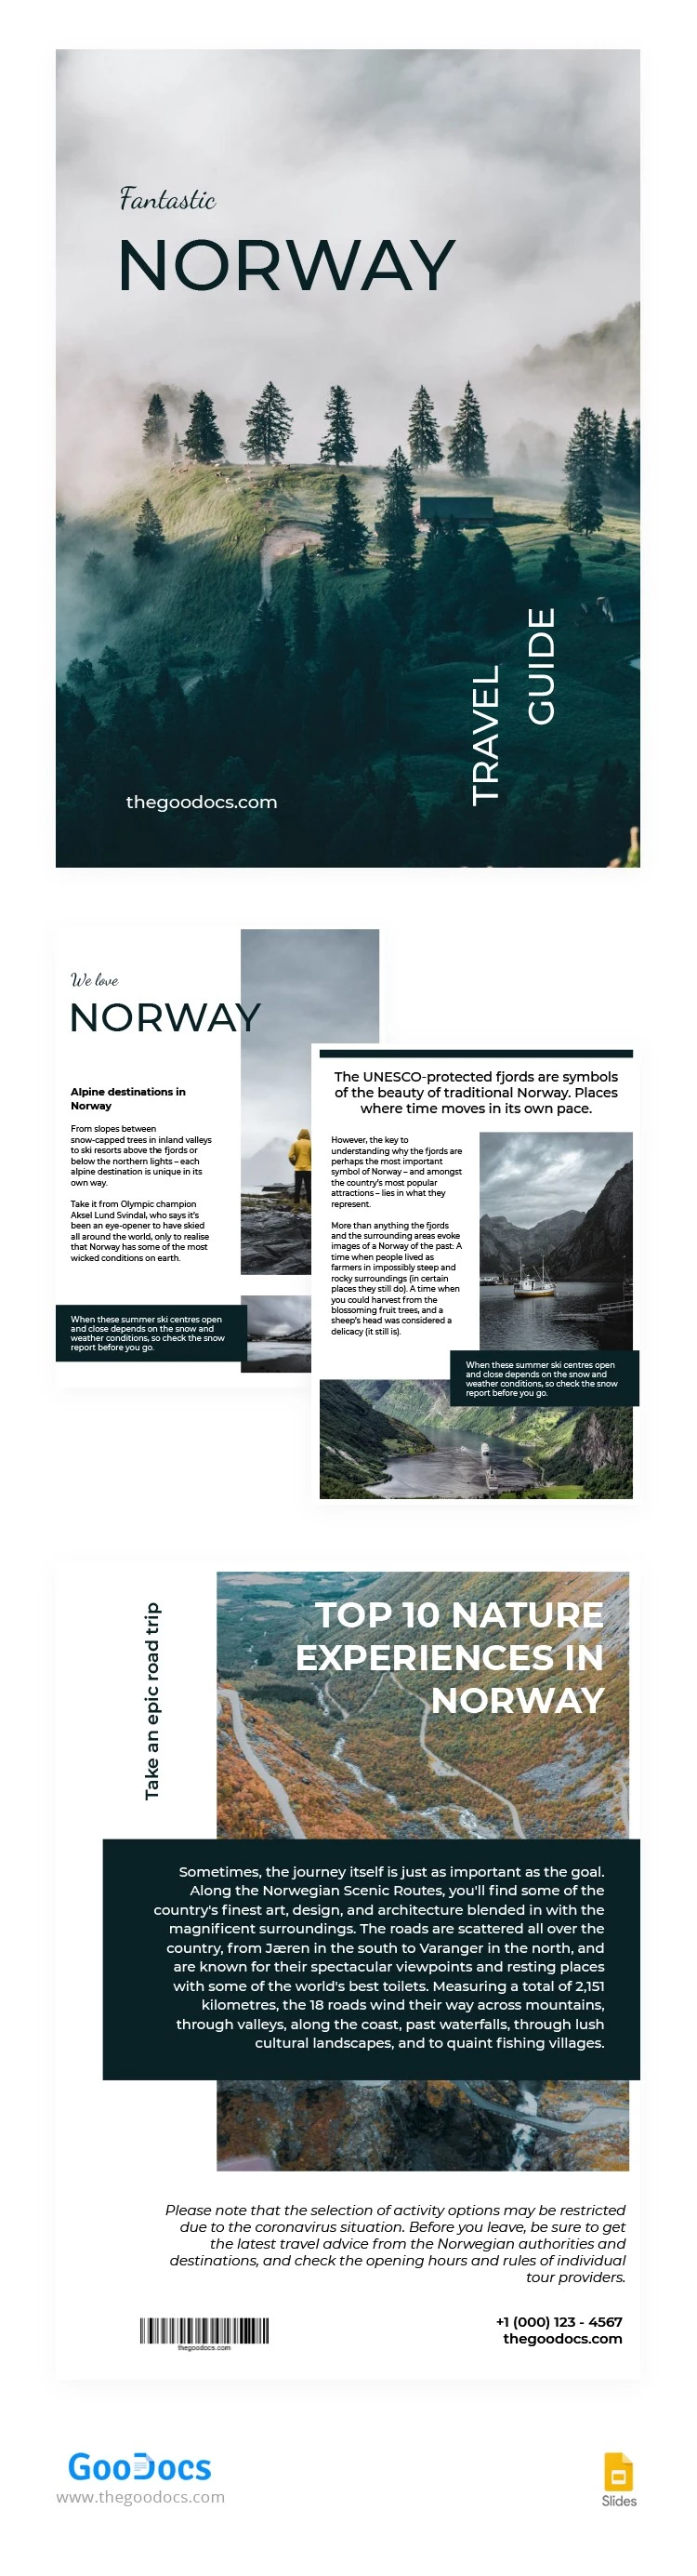 Fantastisches Norwegen Buch - free Google Docs Template - 10062805